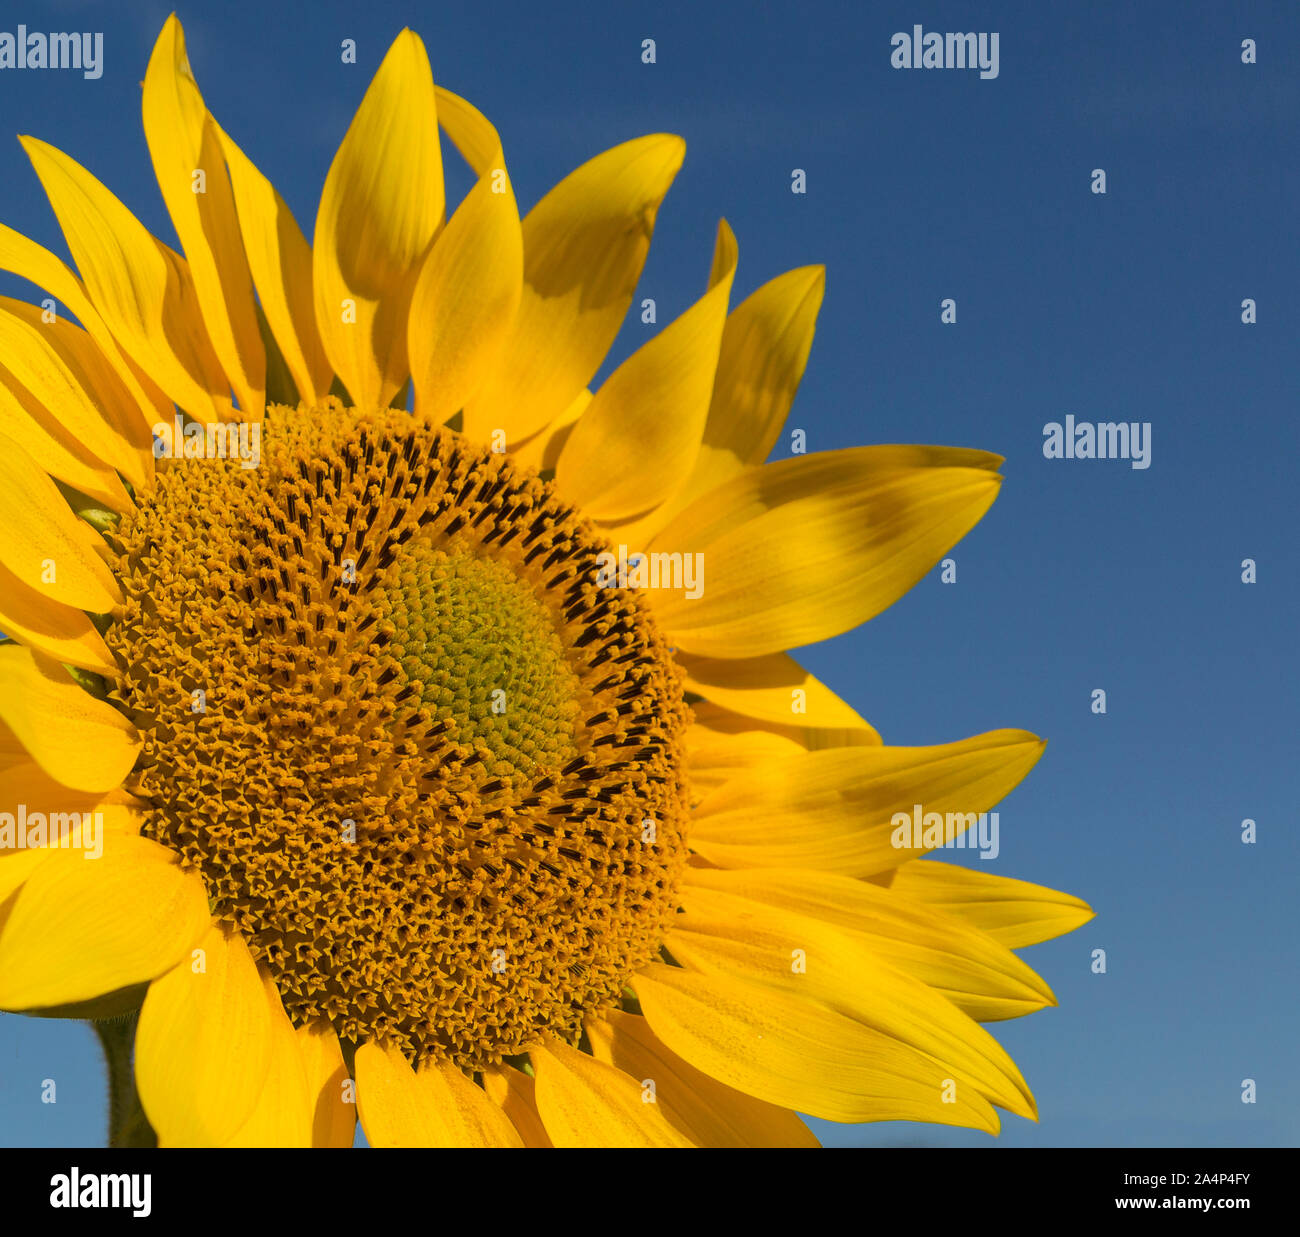 Close up of a sunflower against a blue sky, Olmedillo de Roa, Junta de Castilla y León, Espagne Banque D'Images